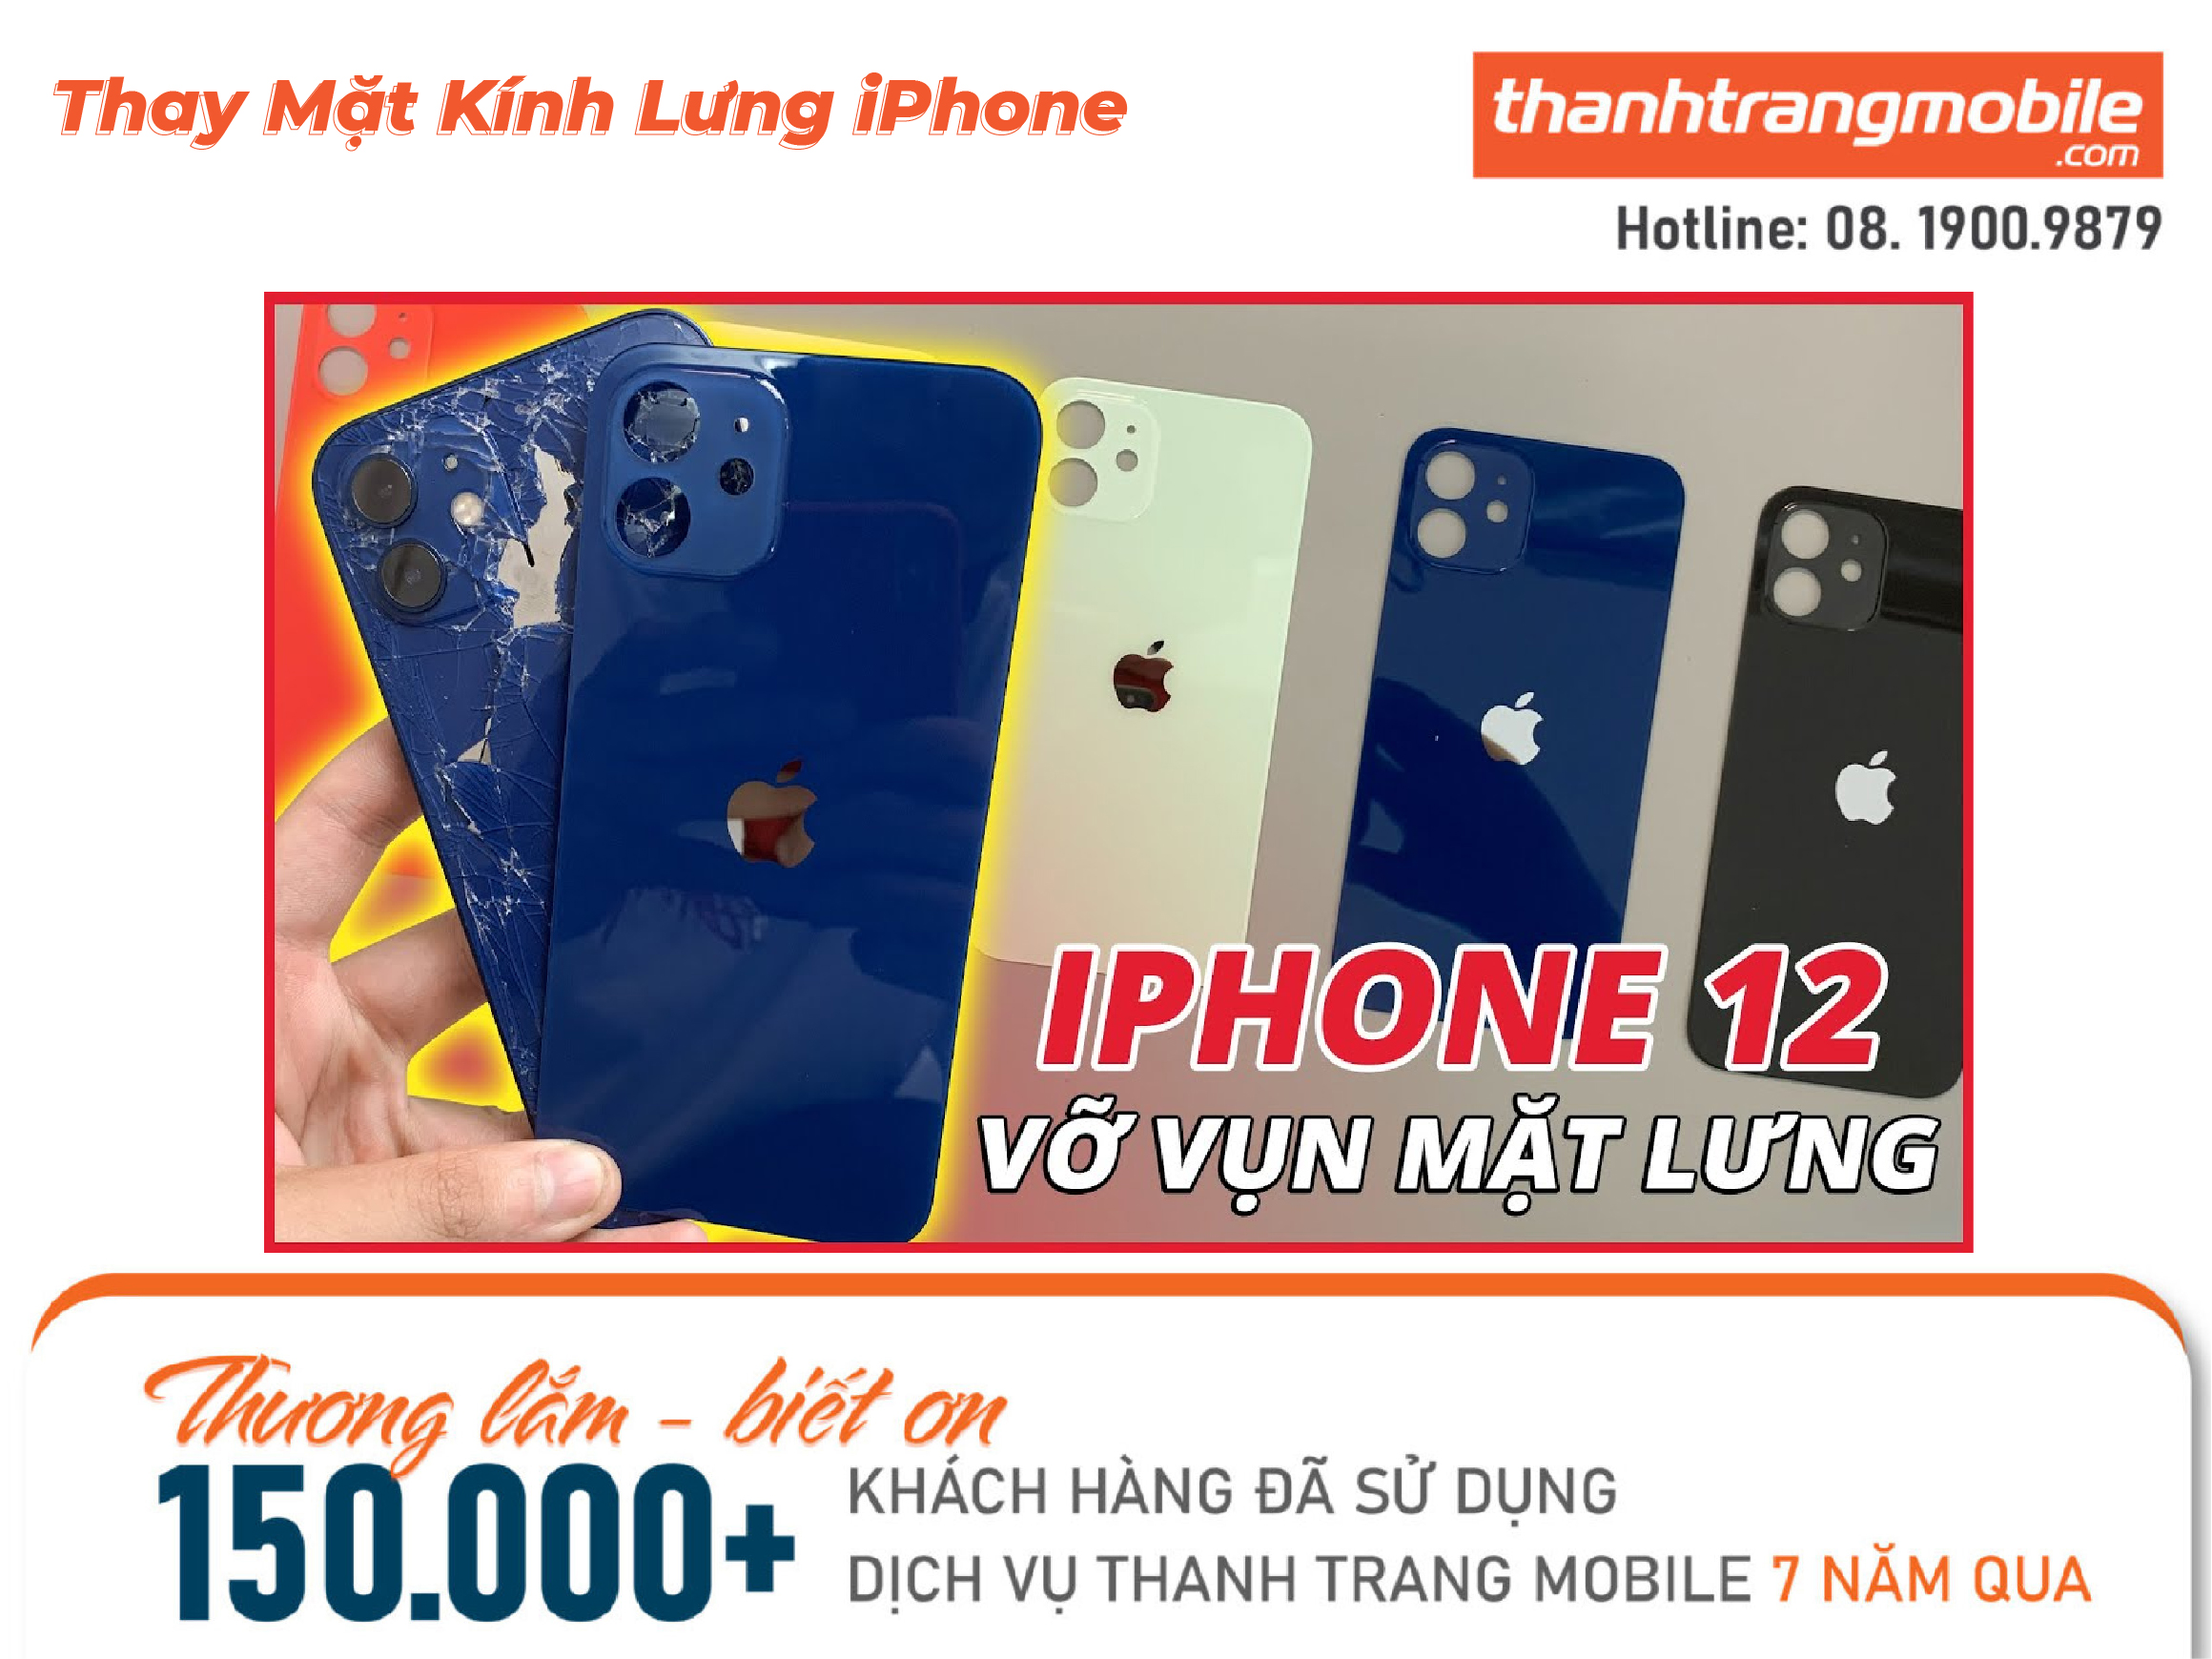 thay-mat-kinh-lung-iphone-thanhtrangmobile_3@4x-100-2 Thay Kính Lưng iPhone 11 Pro Max